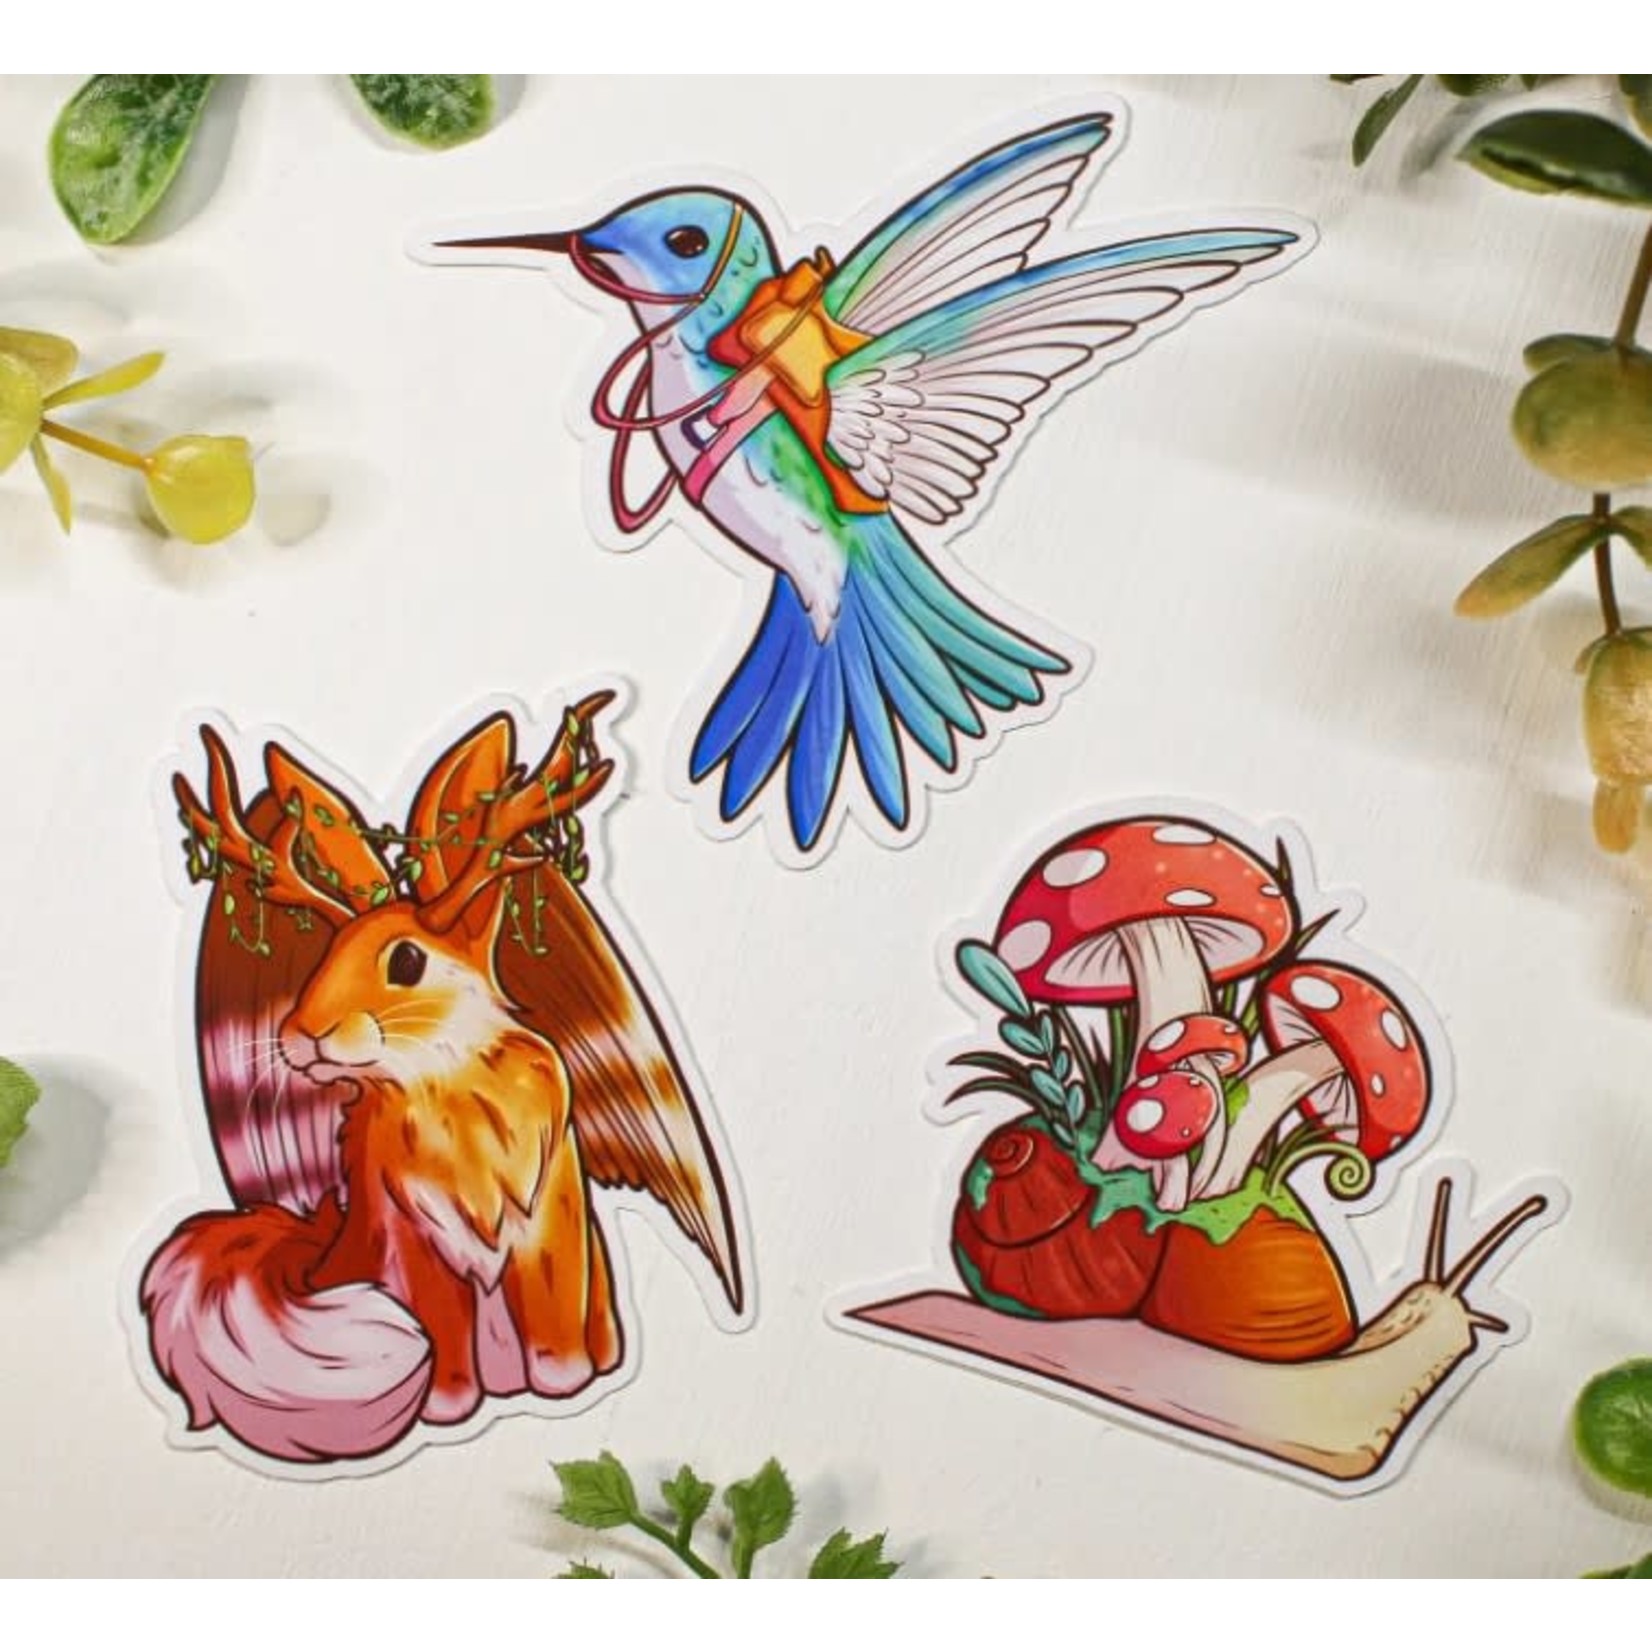 Nemissa's Northwood Arts Fairy Creature Stickers 3 Pack (1 of each)